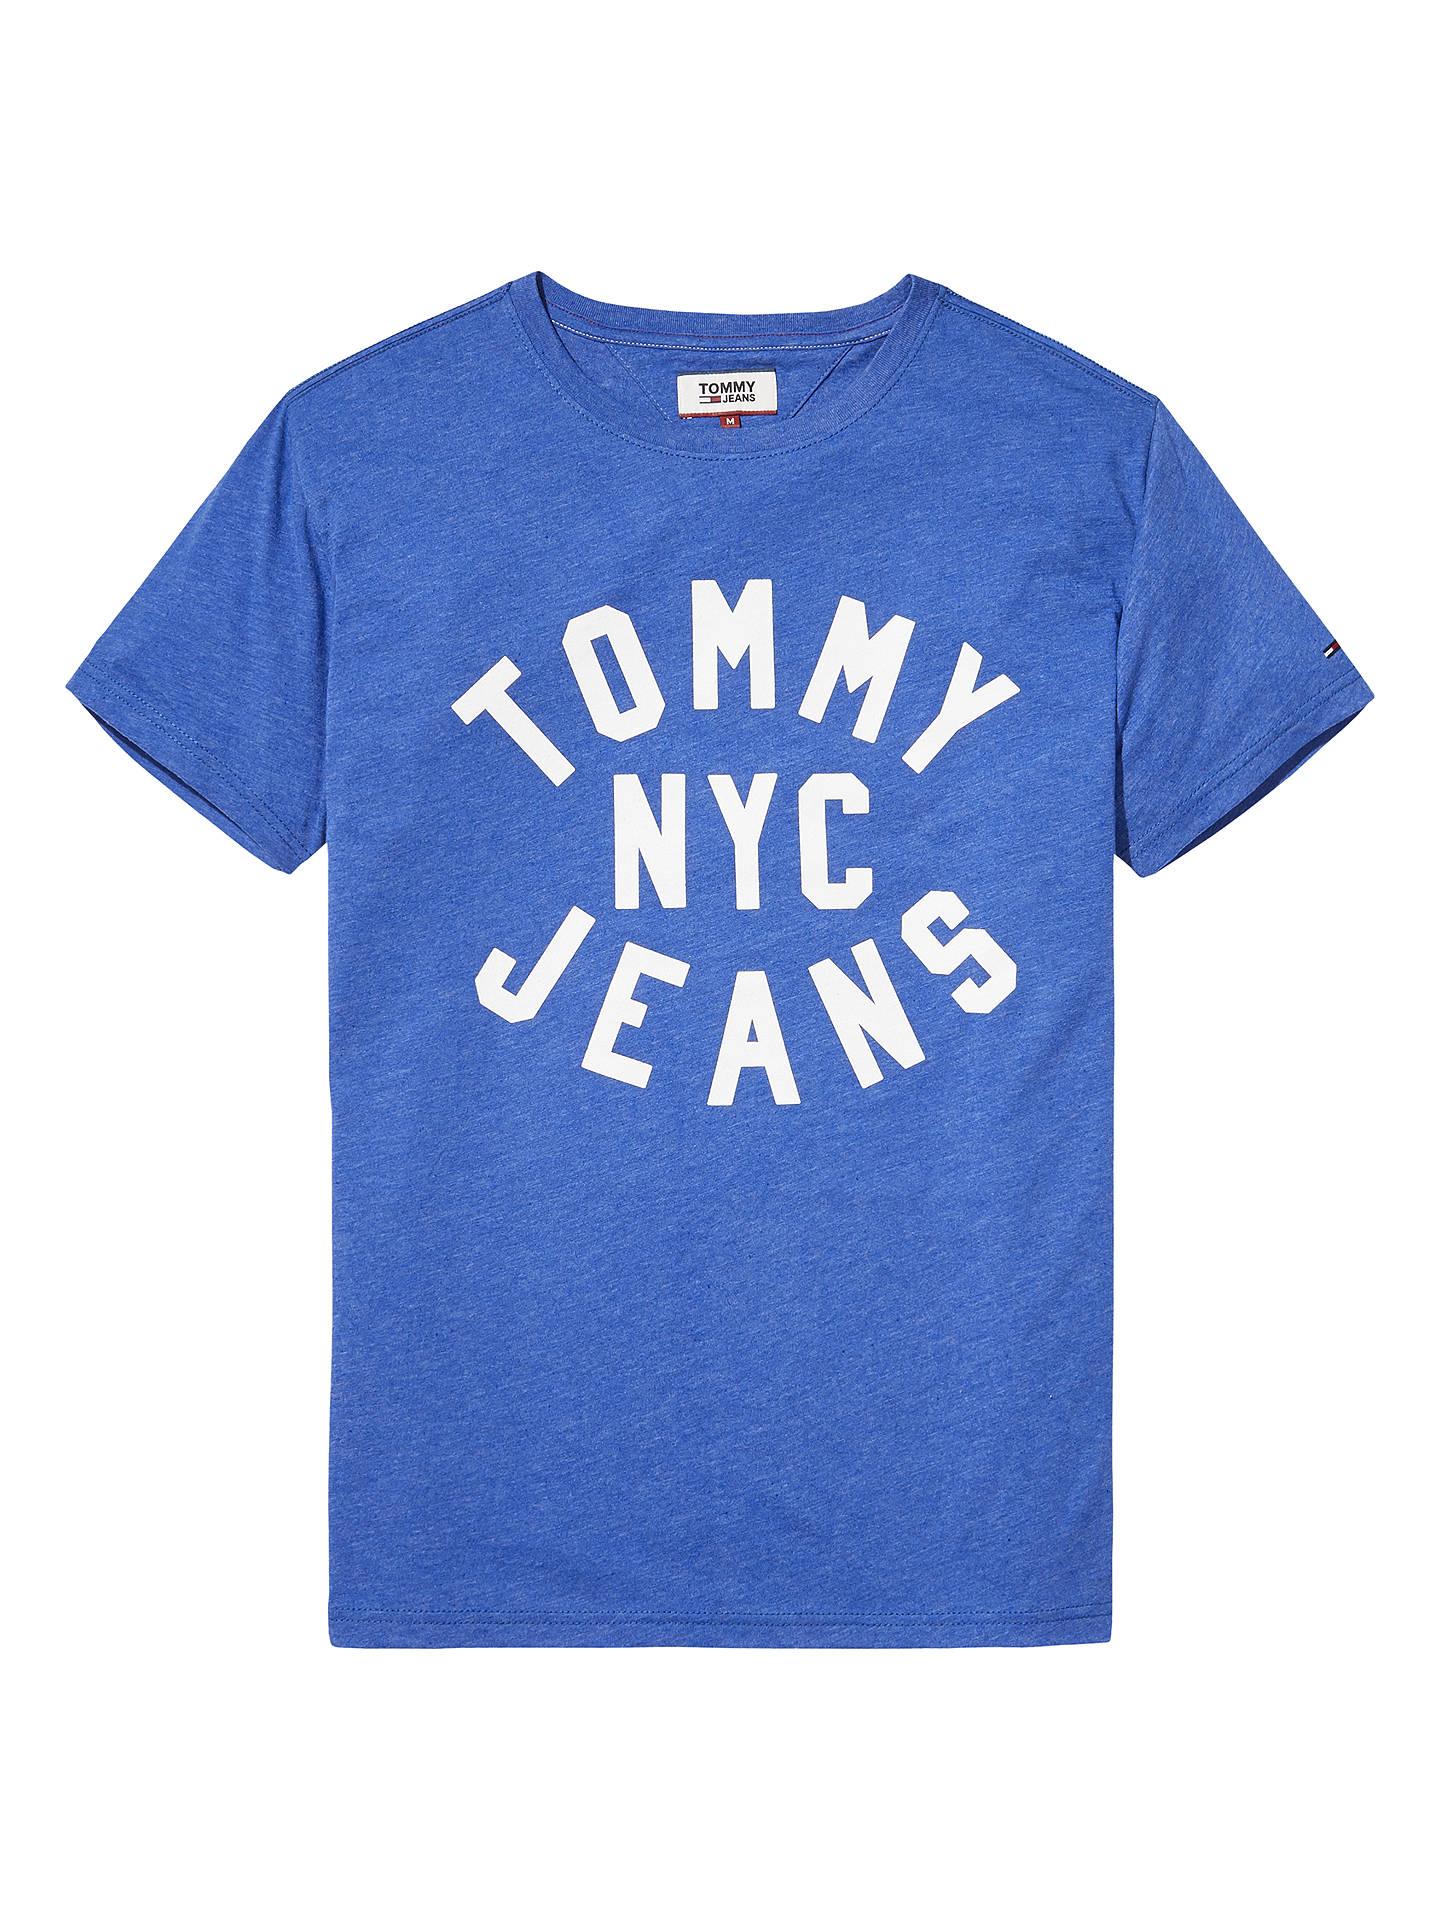 Tommy Jeans Logo - LogoDix